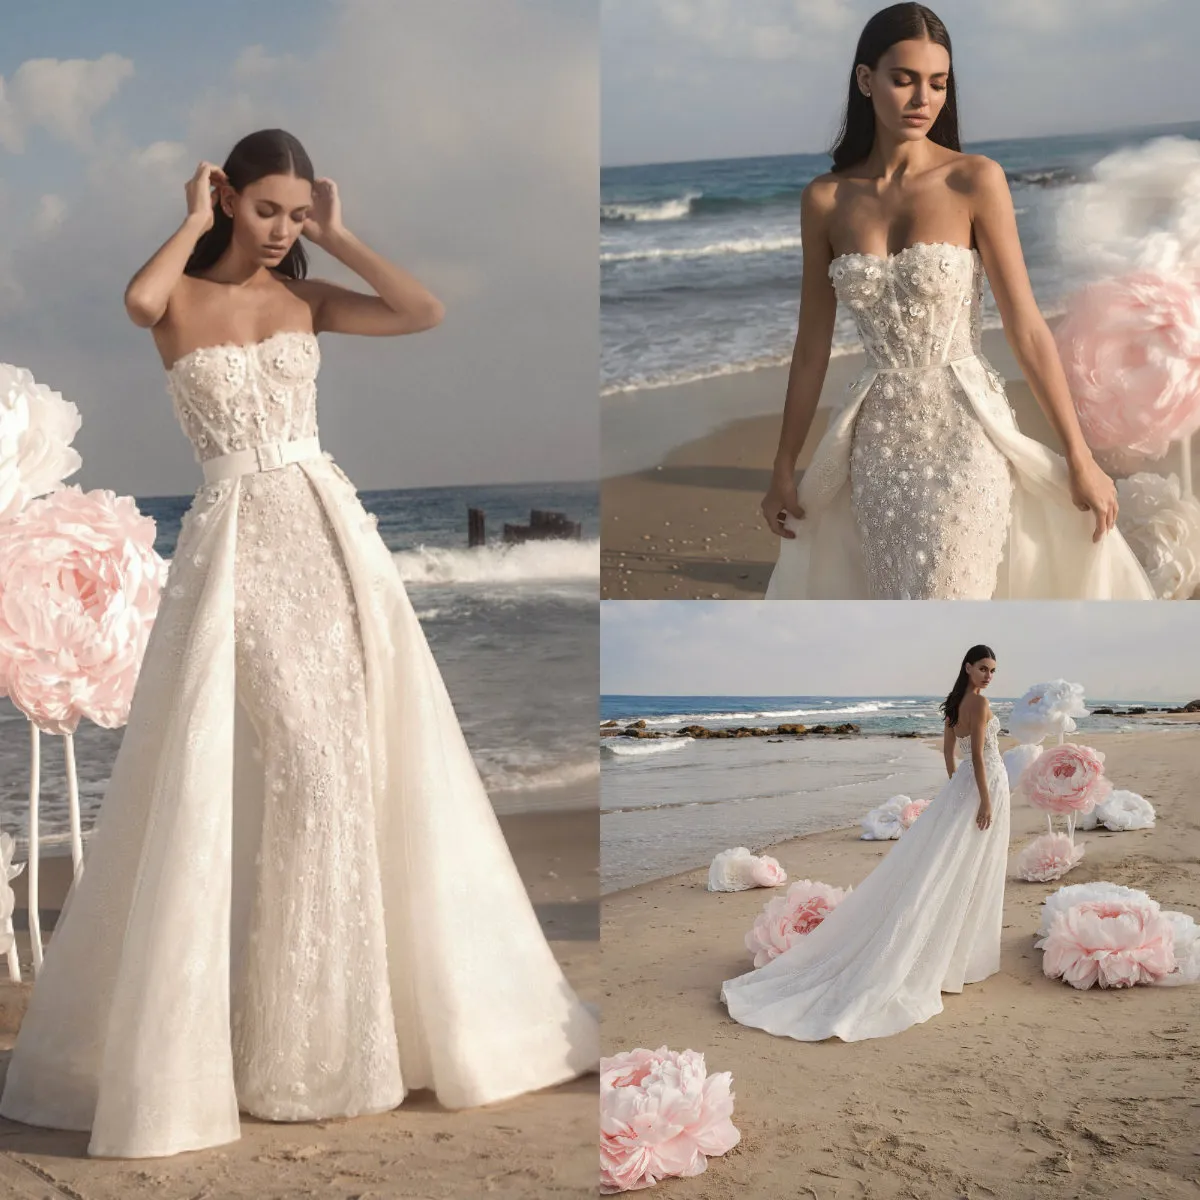 2019 Berta Mermaid Wedding Dresses With Detachable Overskirts Lace 3D Floral Applique Beads Beach Wedding Dress vestito da sposa Bridal Gown